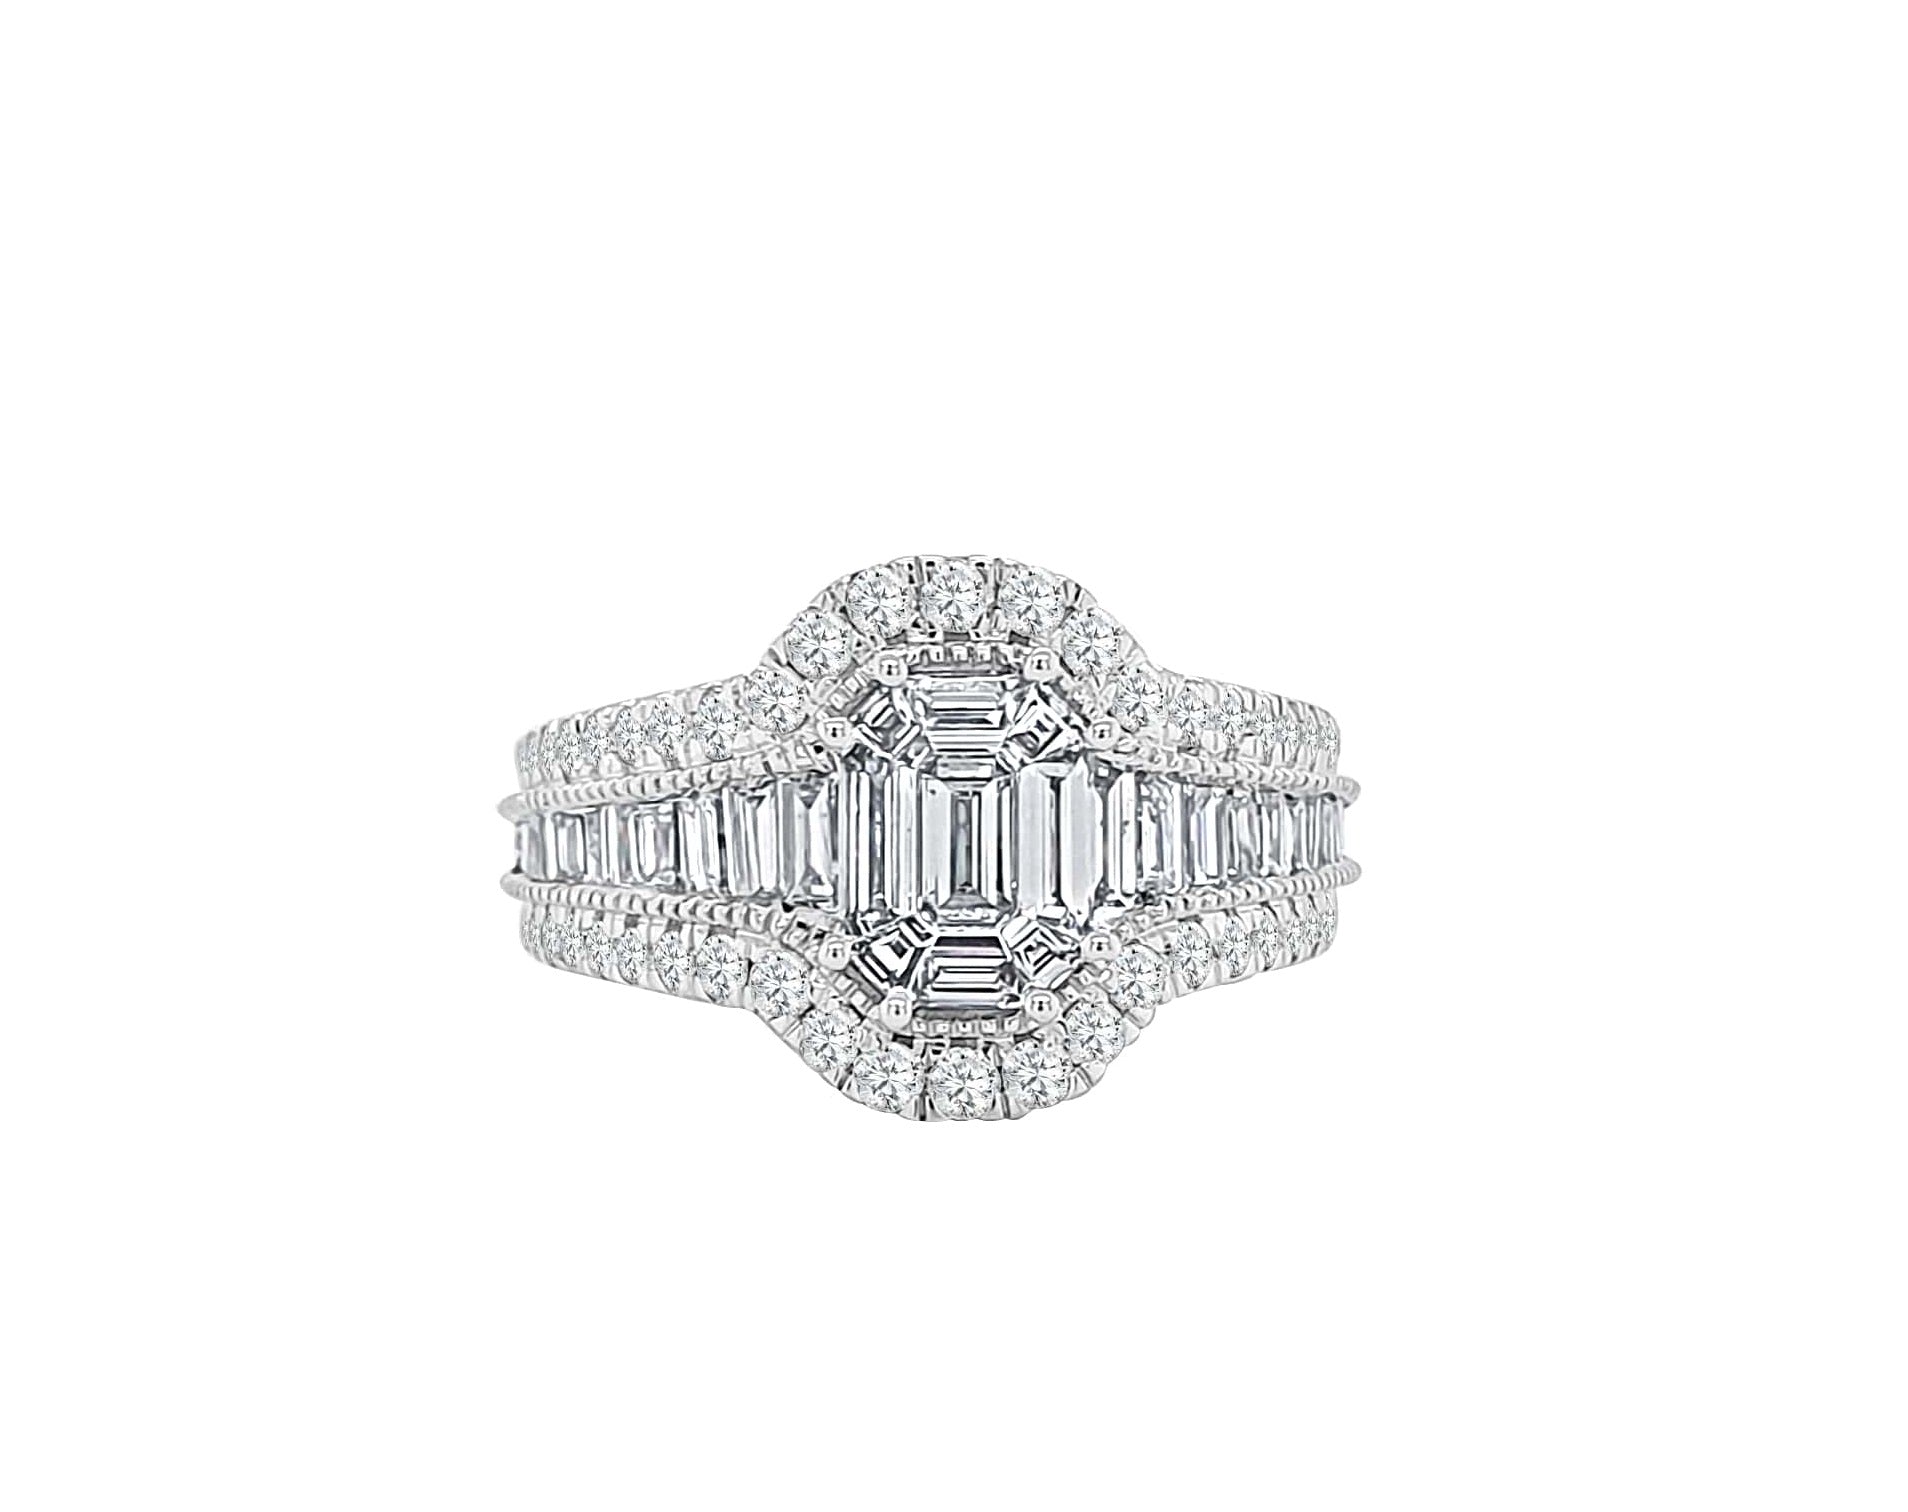 Mosaic Bridal Diamond Engagement Ring made in 14k White gold